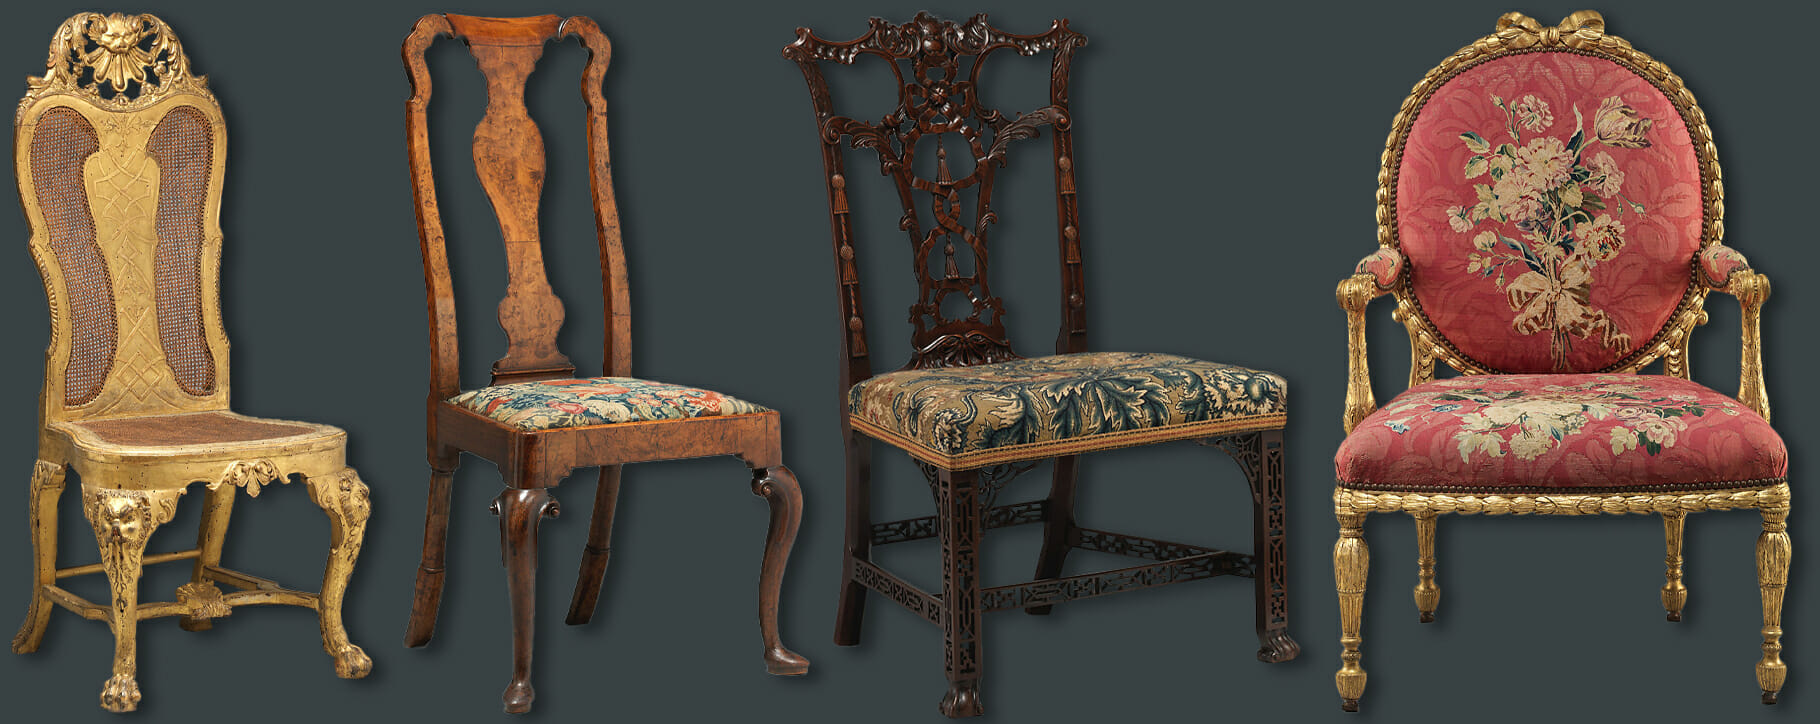 18th century chairs